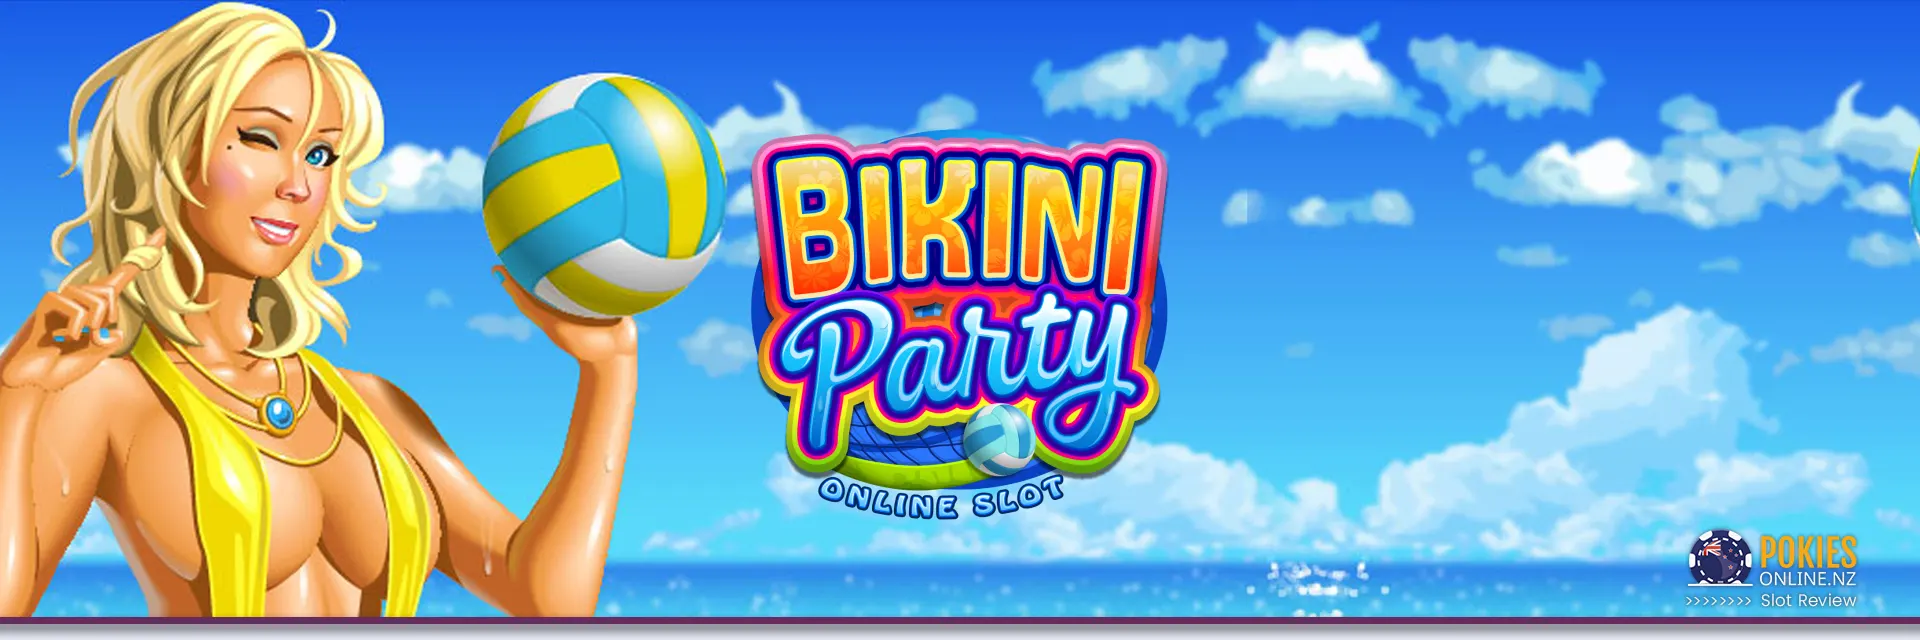 Bikini party slot banner